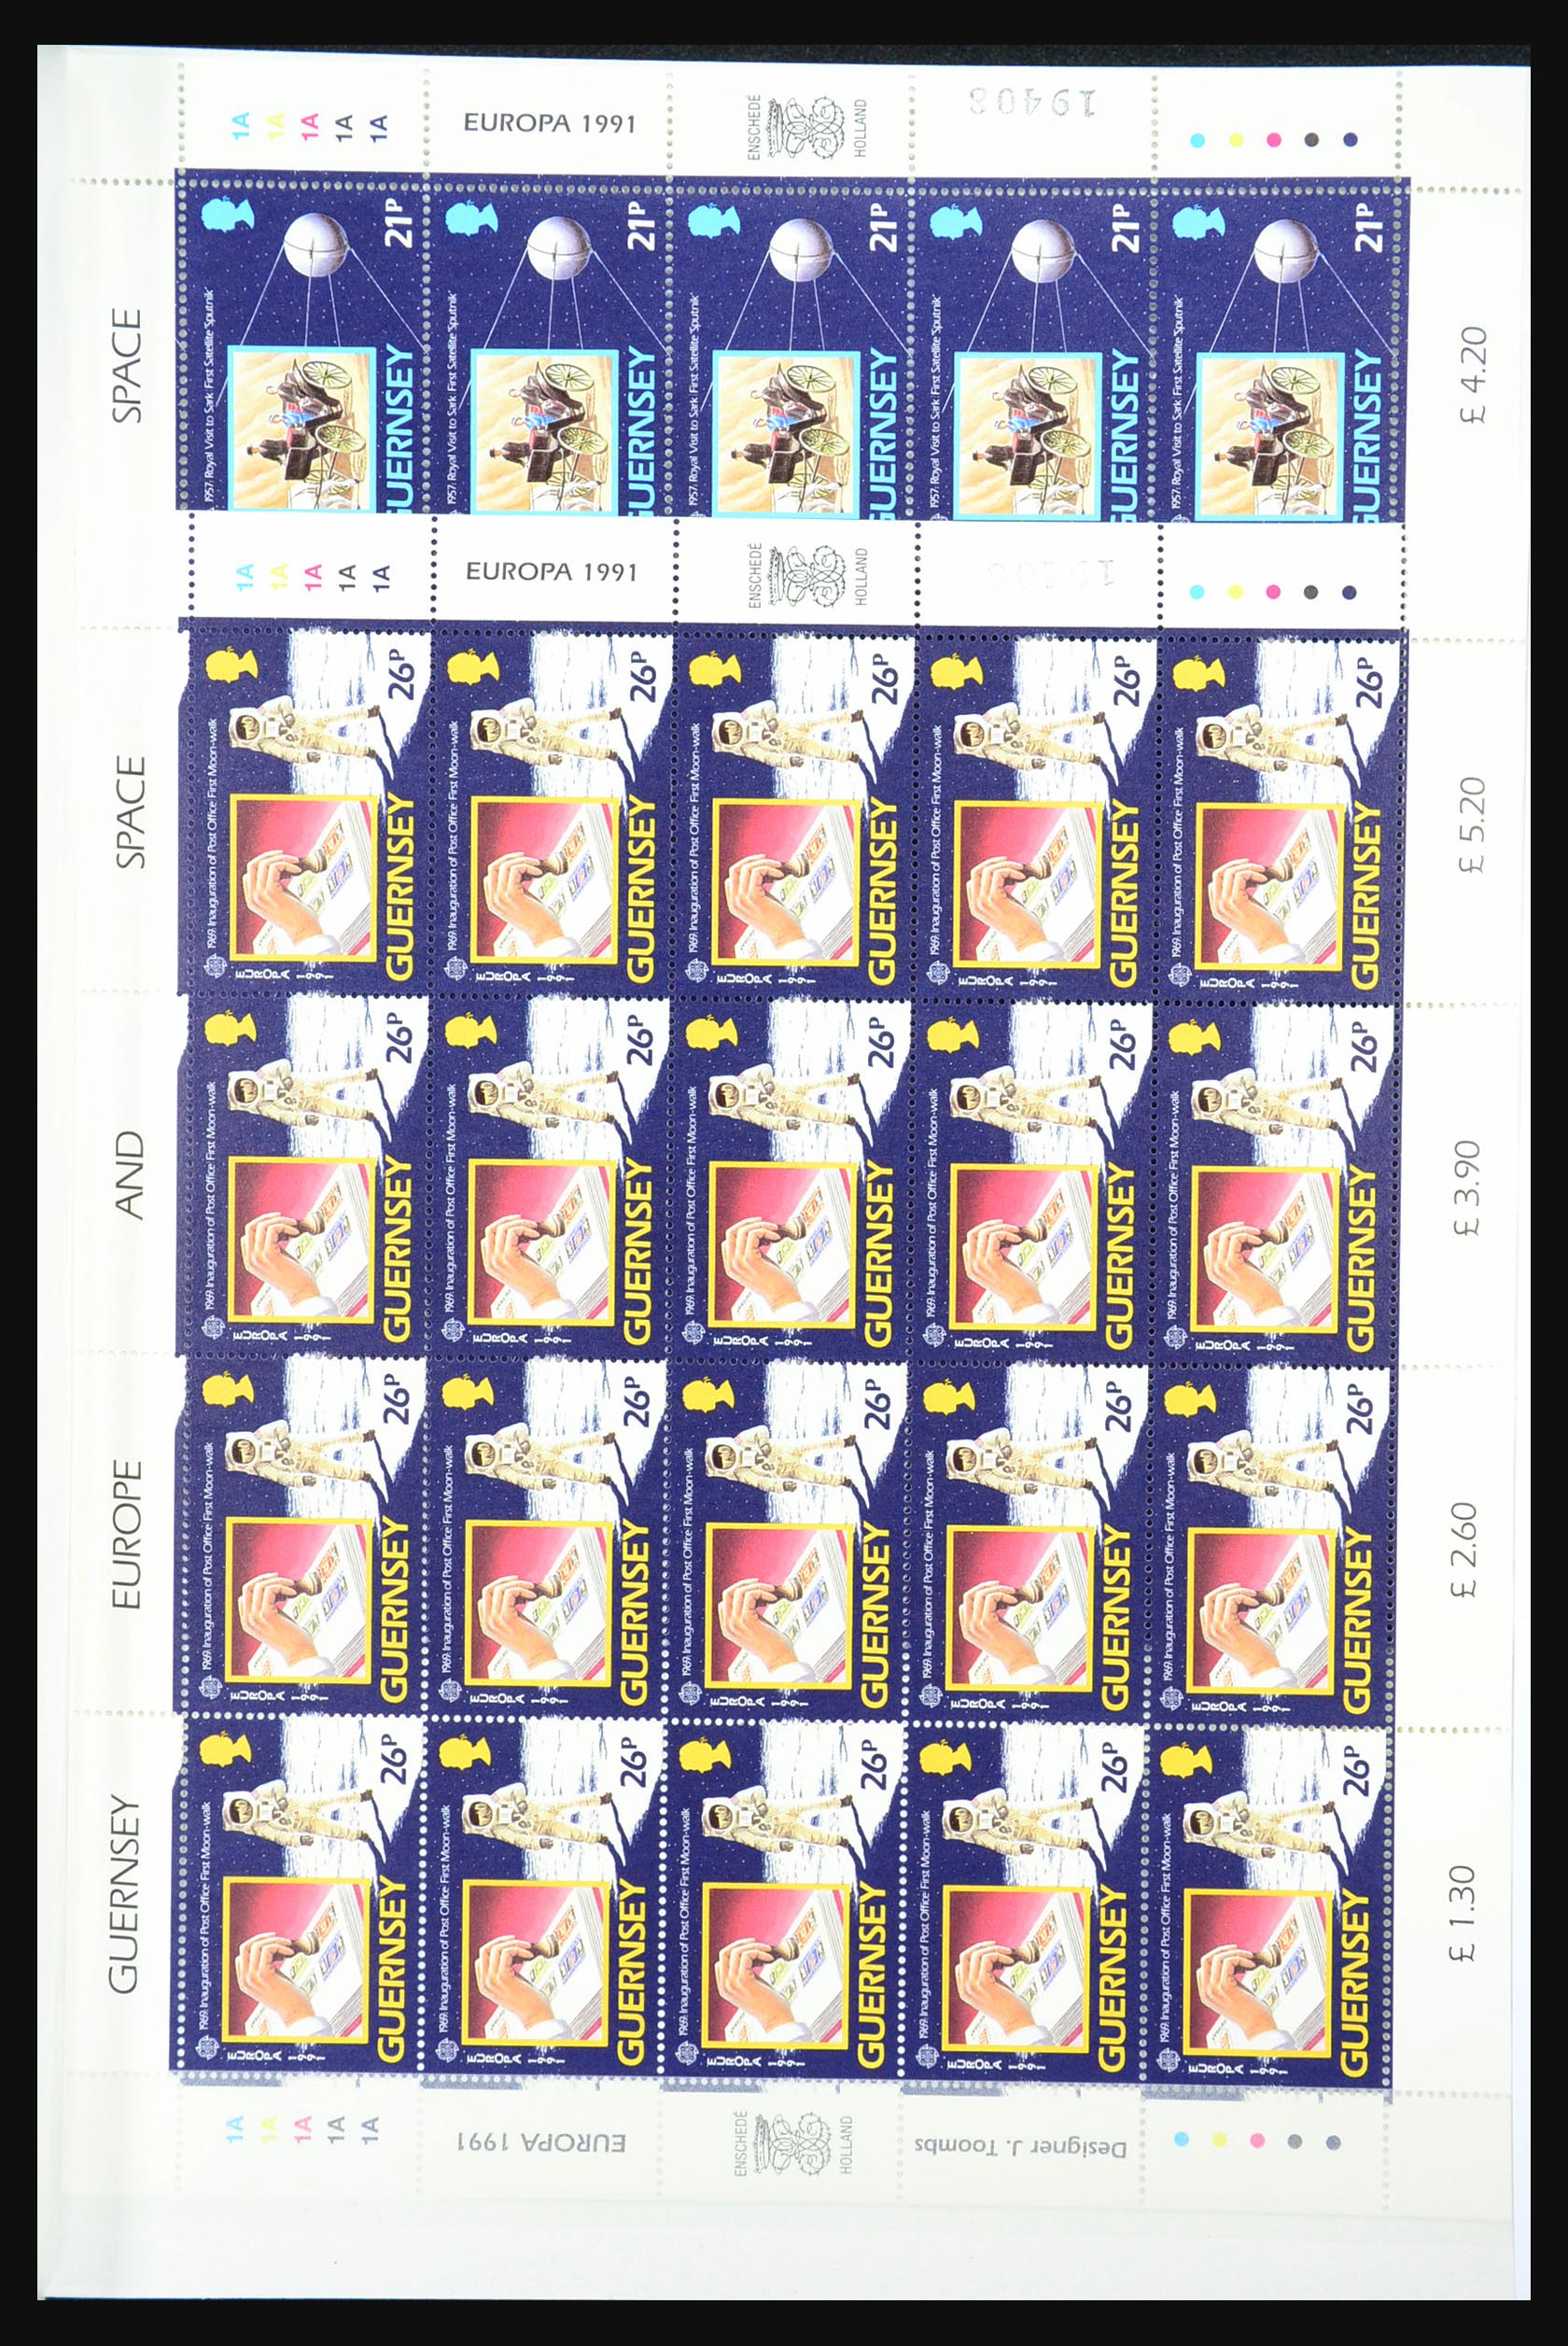 31249 031 - 31249 Channel Islands souvenir sheets and sheetlets 1978-1997.